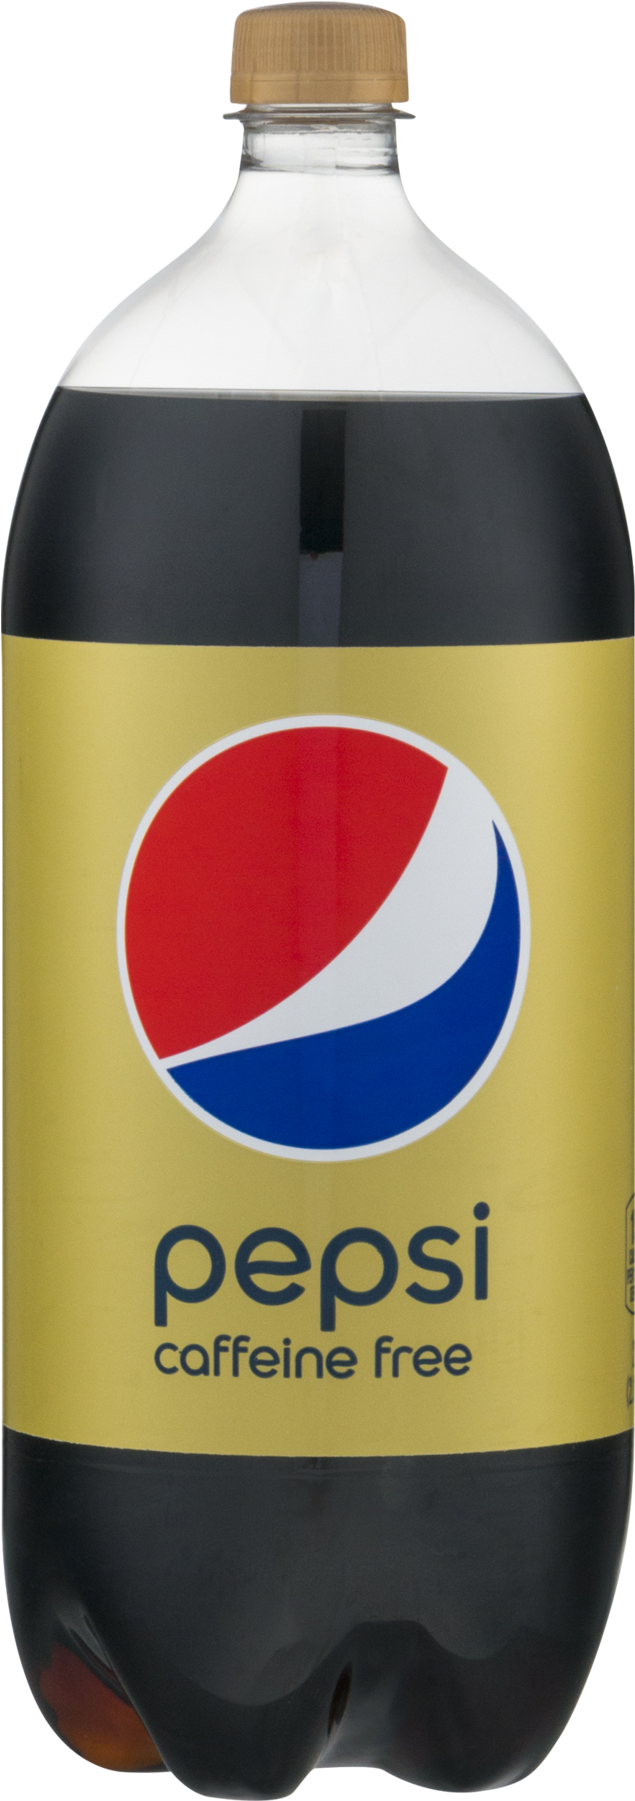 Pepsi Caffeine Free Bottle PNG